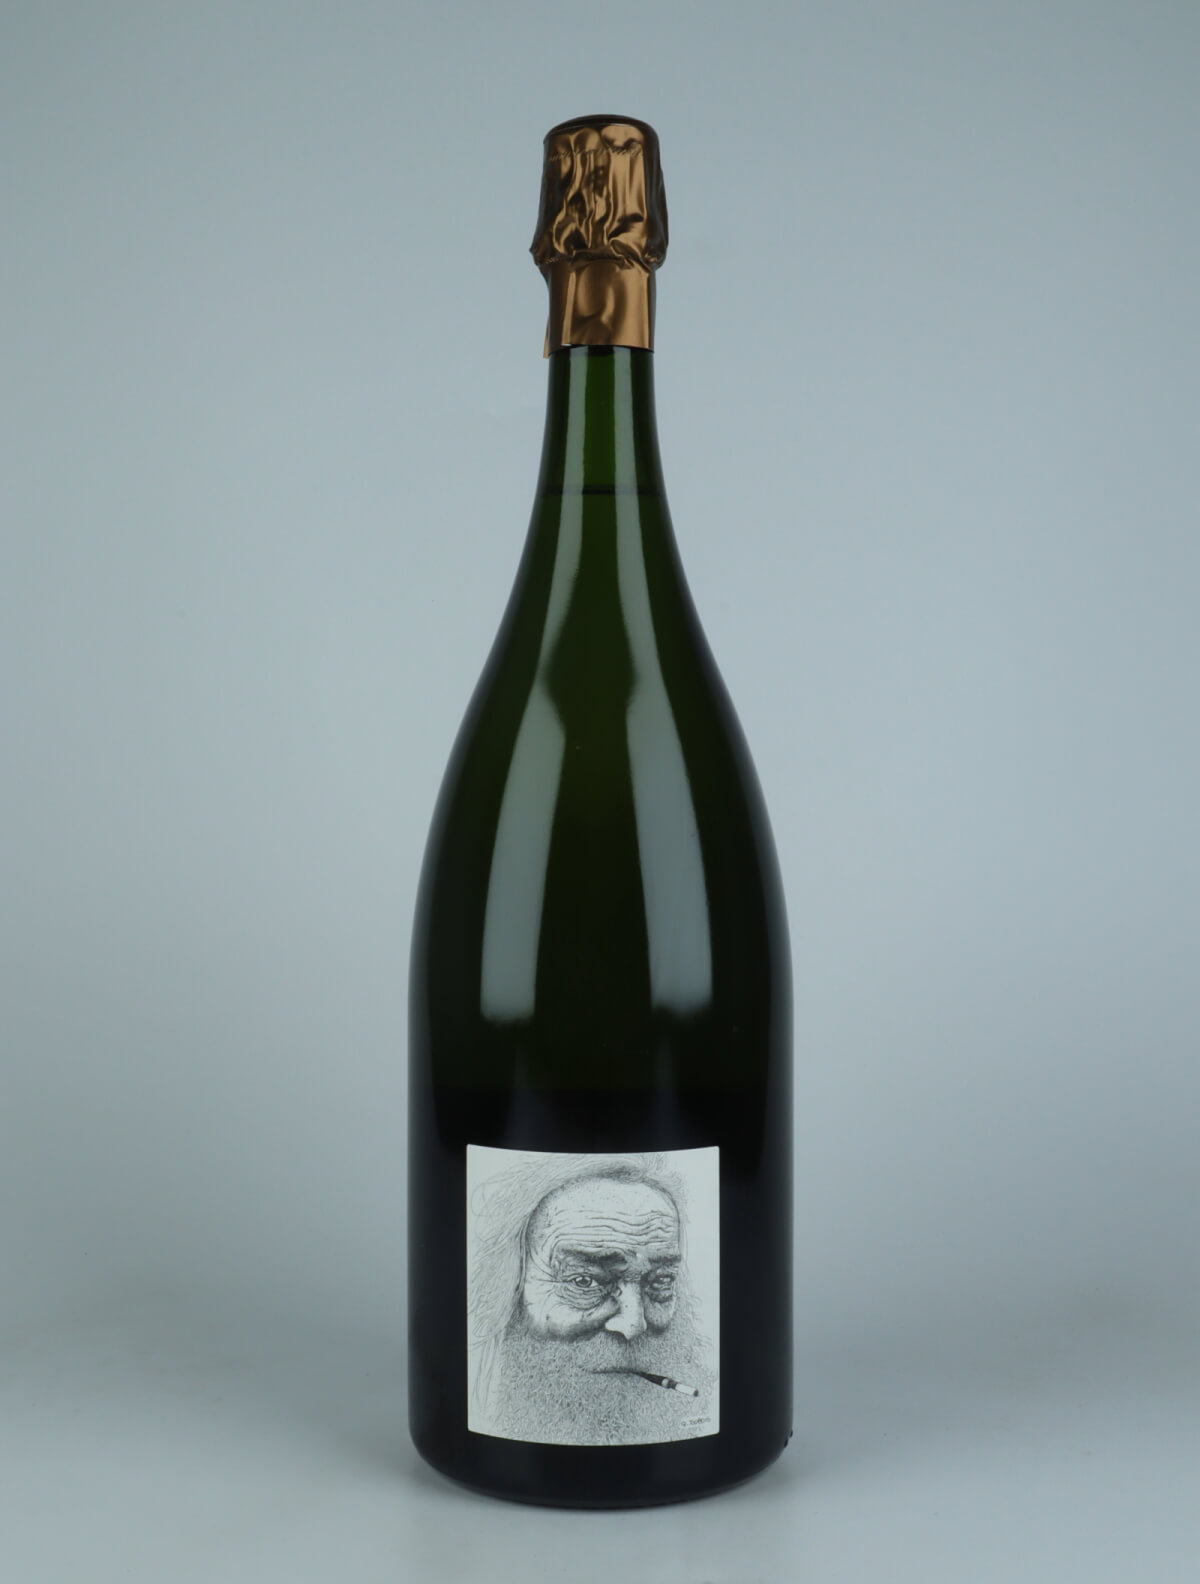 A bottle 2017 Heraclite - Chardonnay - Brut Nature - Magnum Sparkling from Stroebel, Champagne in France